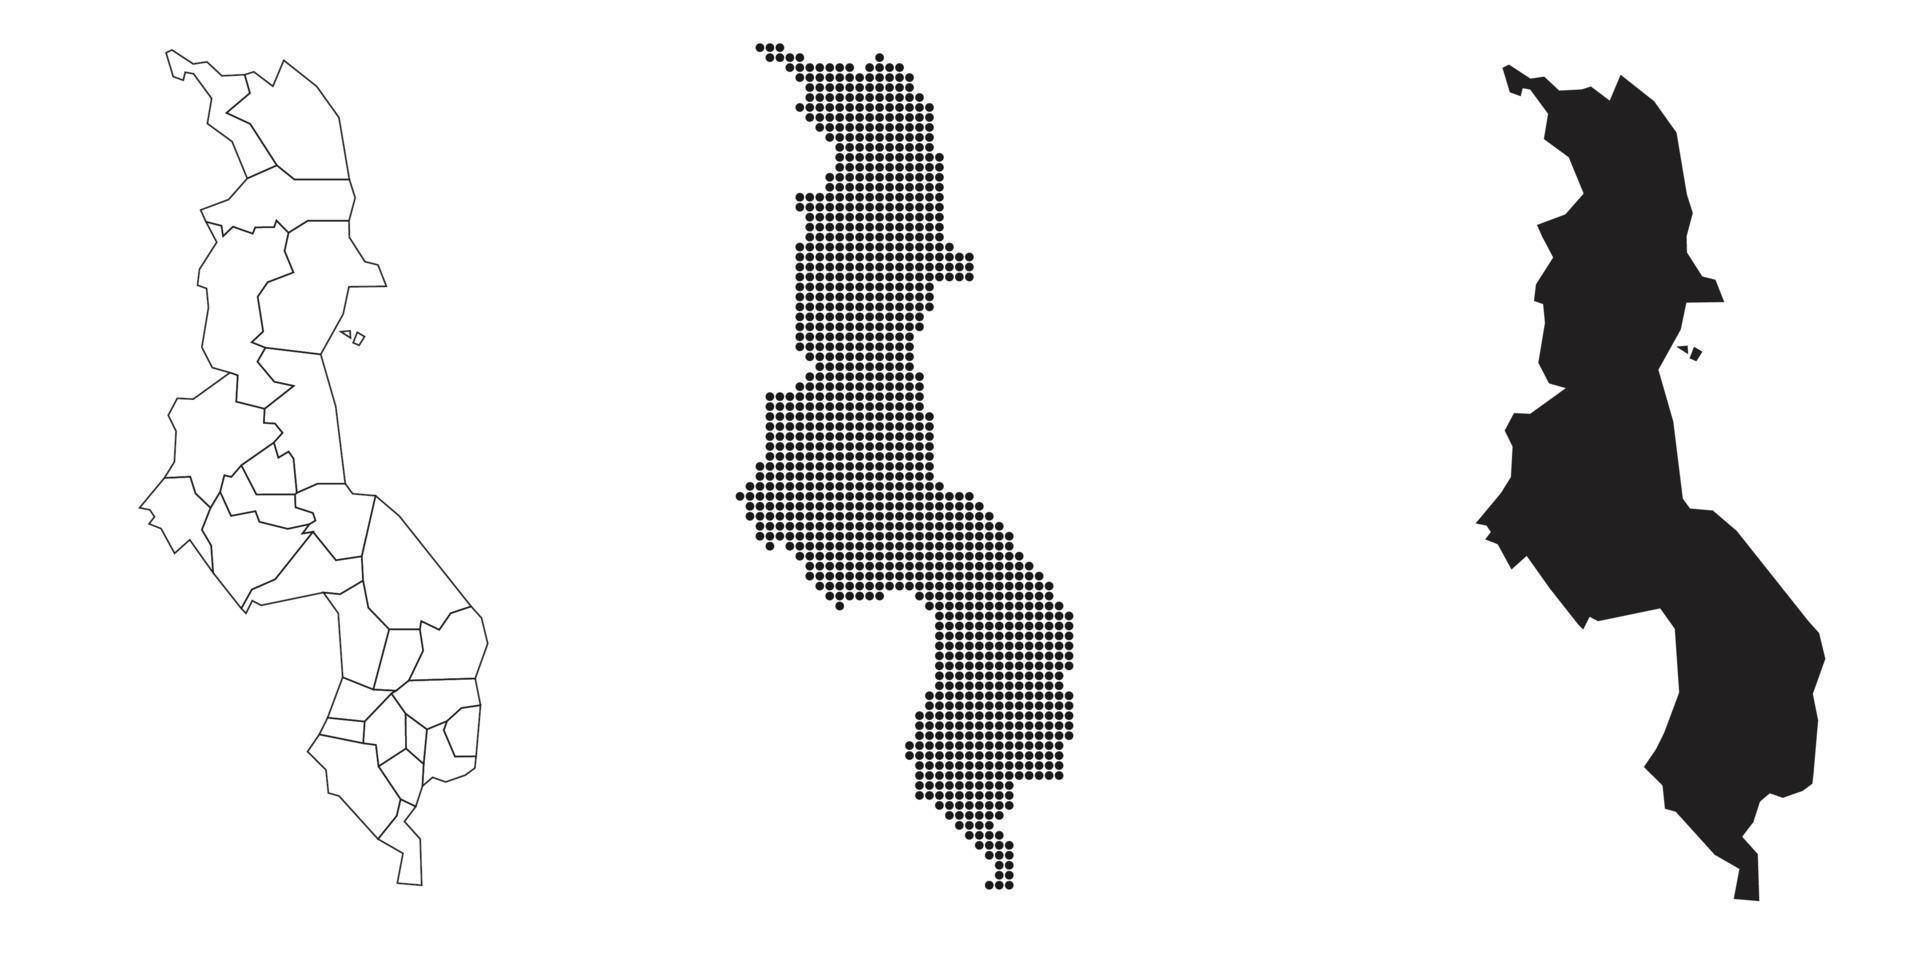 malawi karta isolerad på en vit bakgrund. vektor